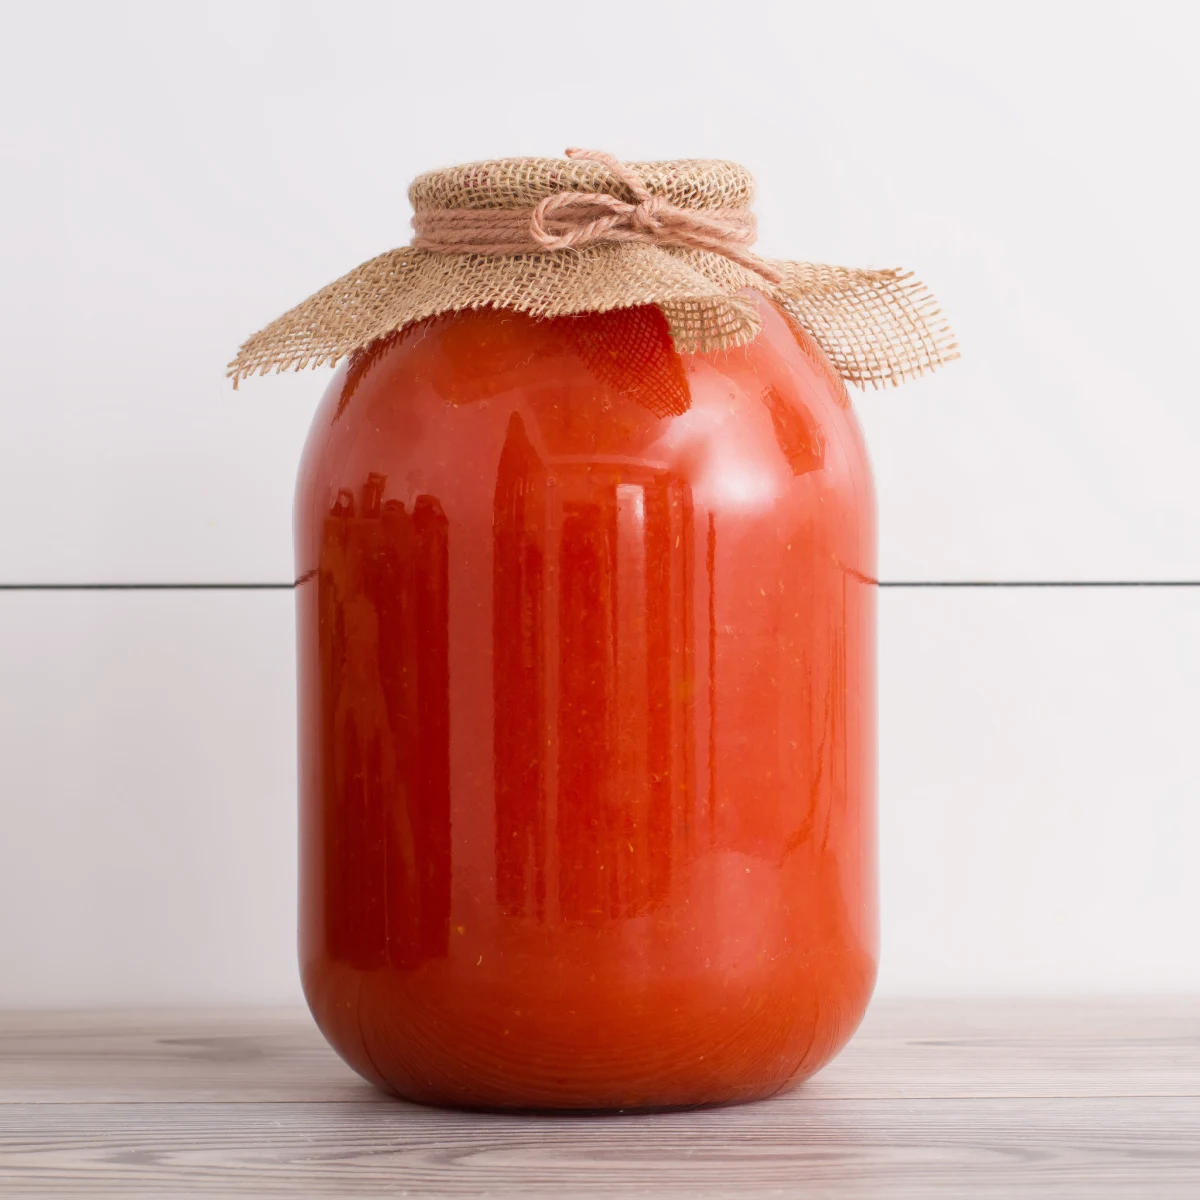 A jar of homemade tomato juice